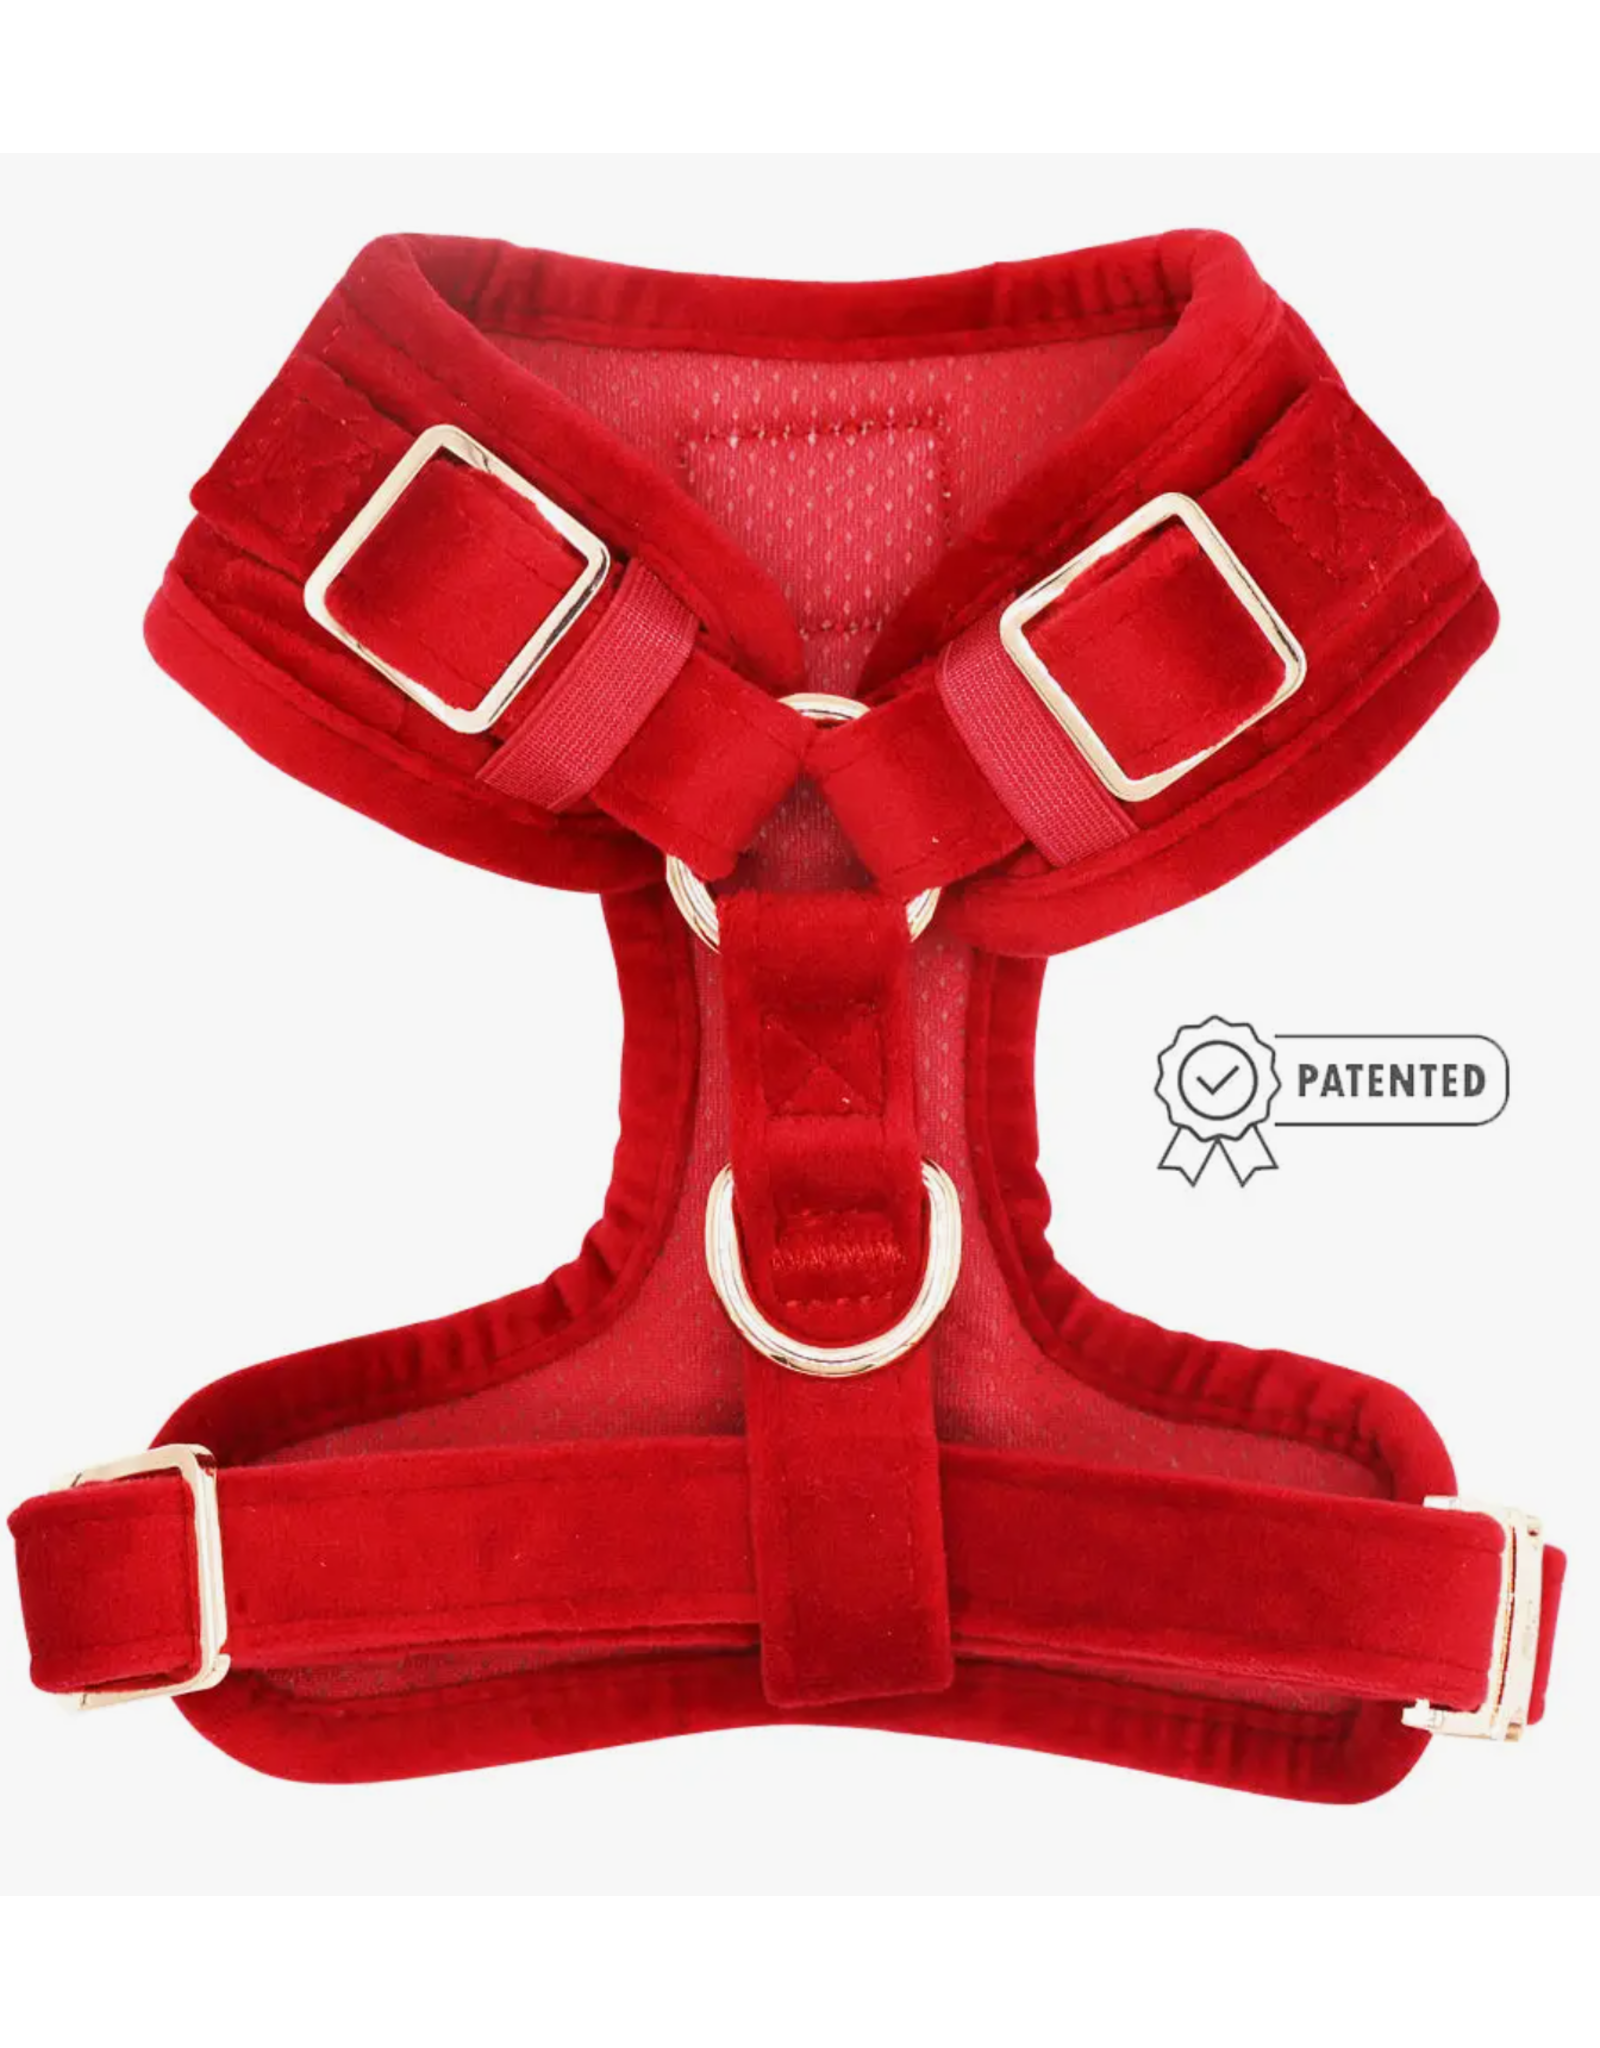 Sassy Woof Dog Adjustable Harness - Red Velvet